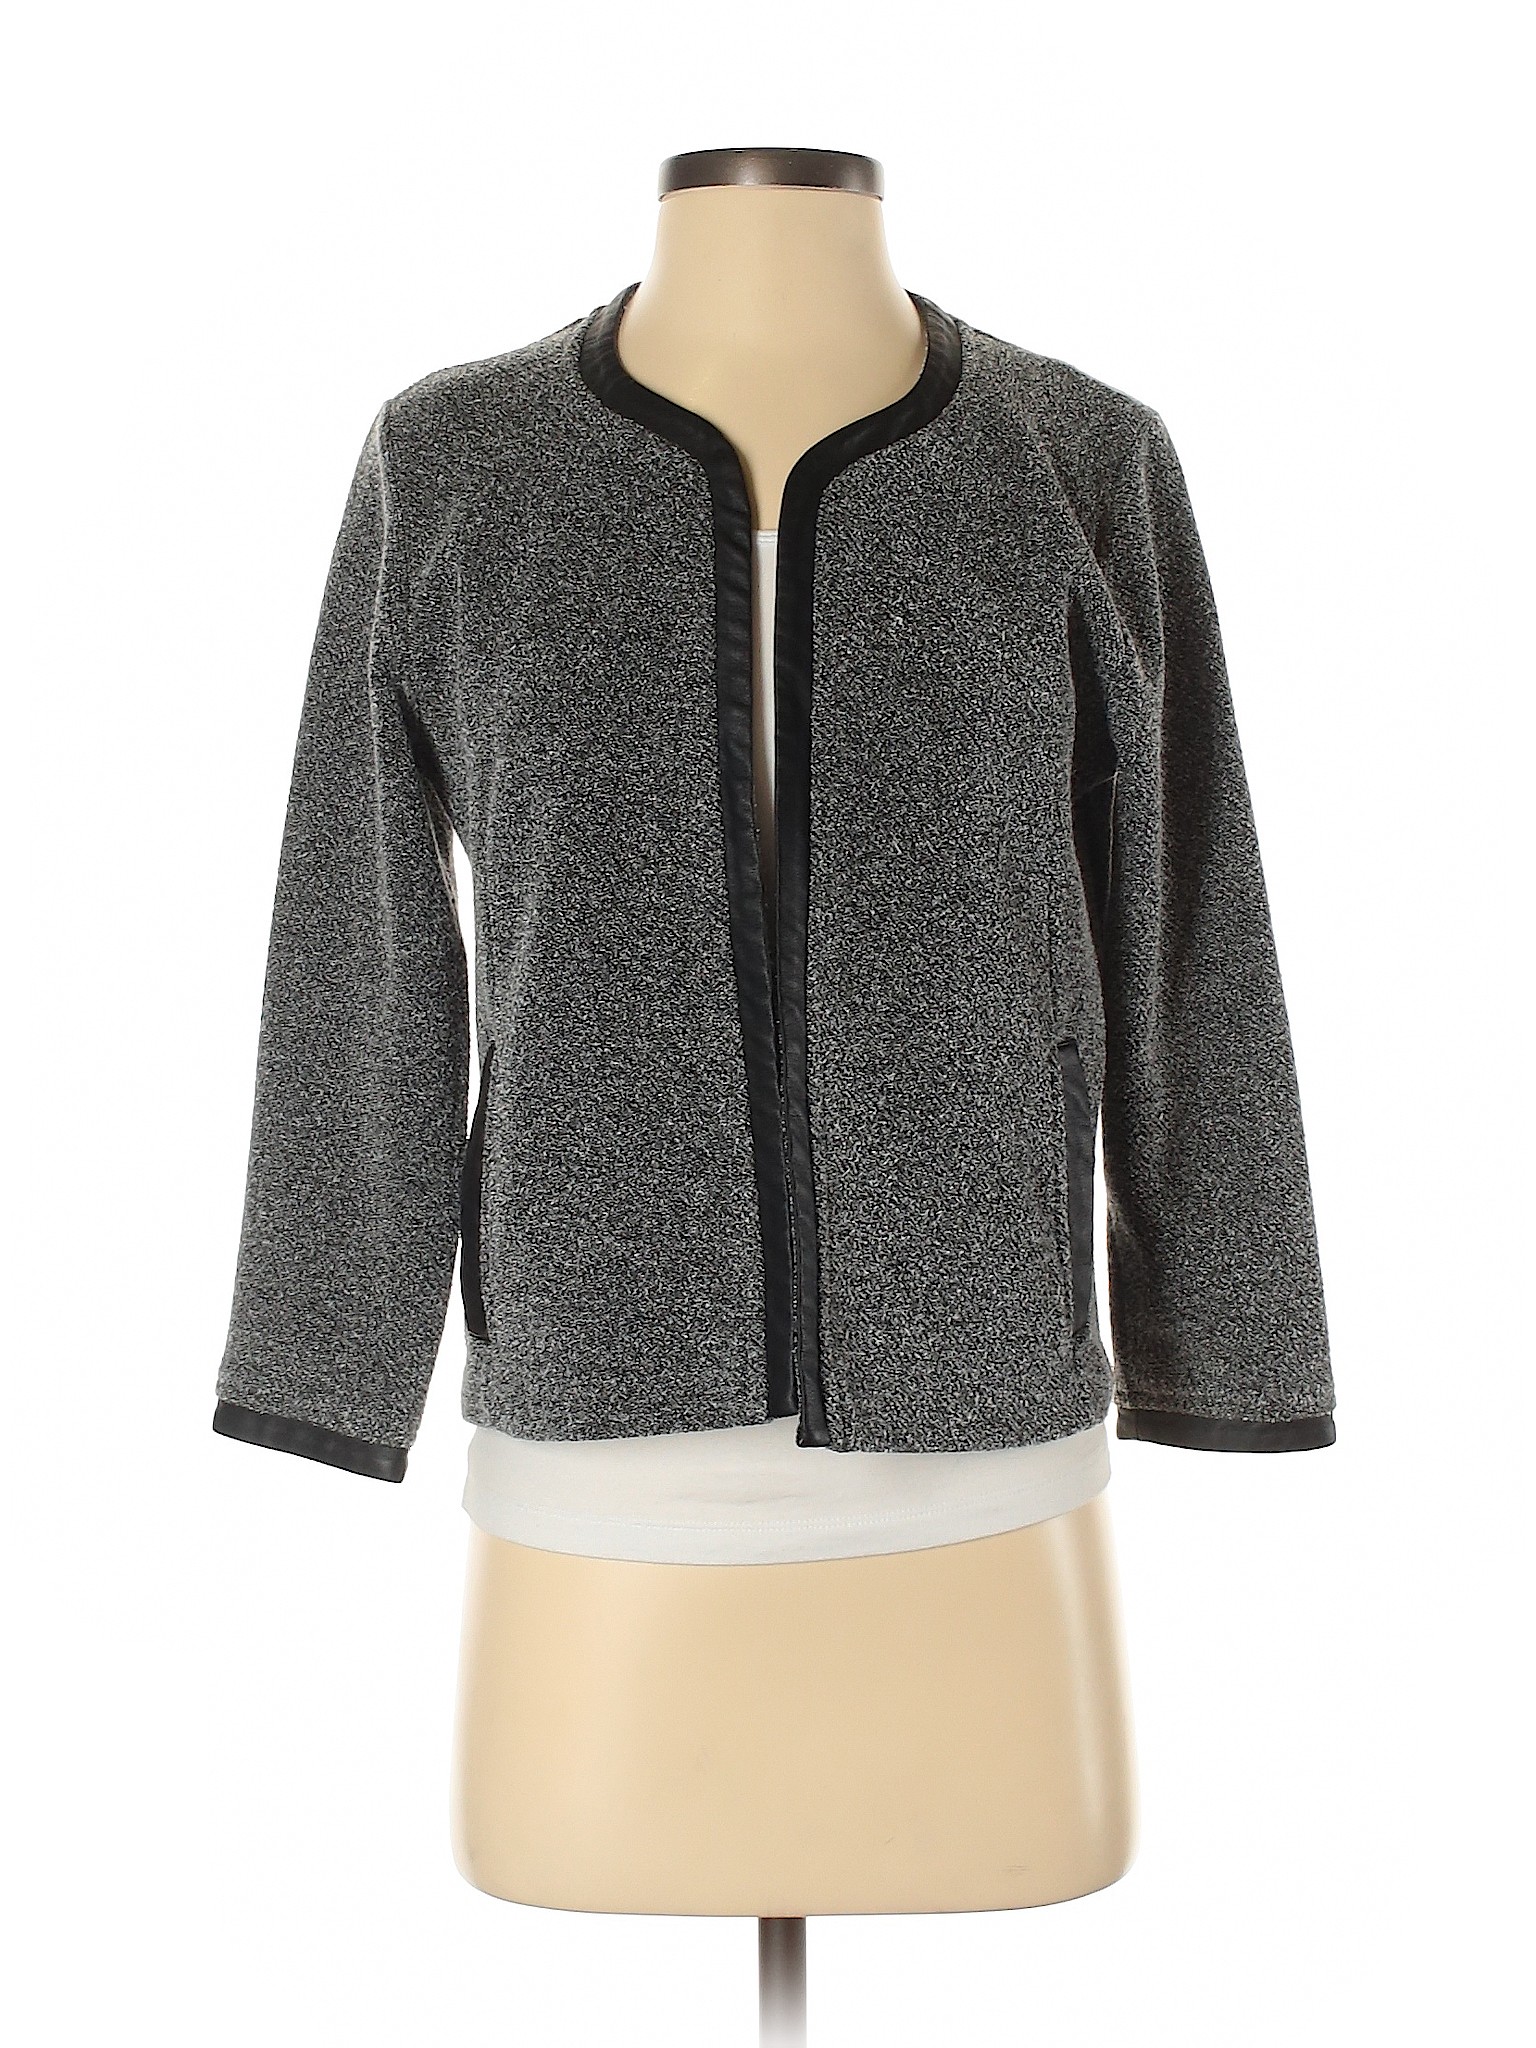 Jones New York Women Gray Jacket S | eBay